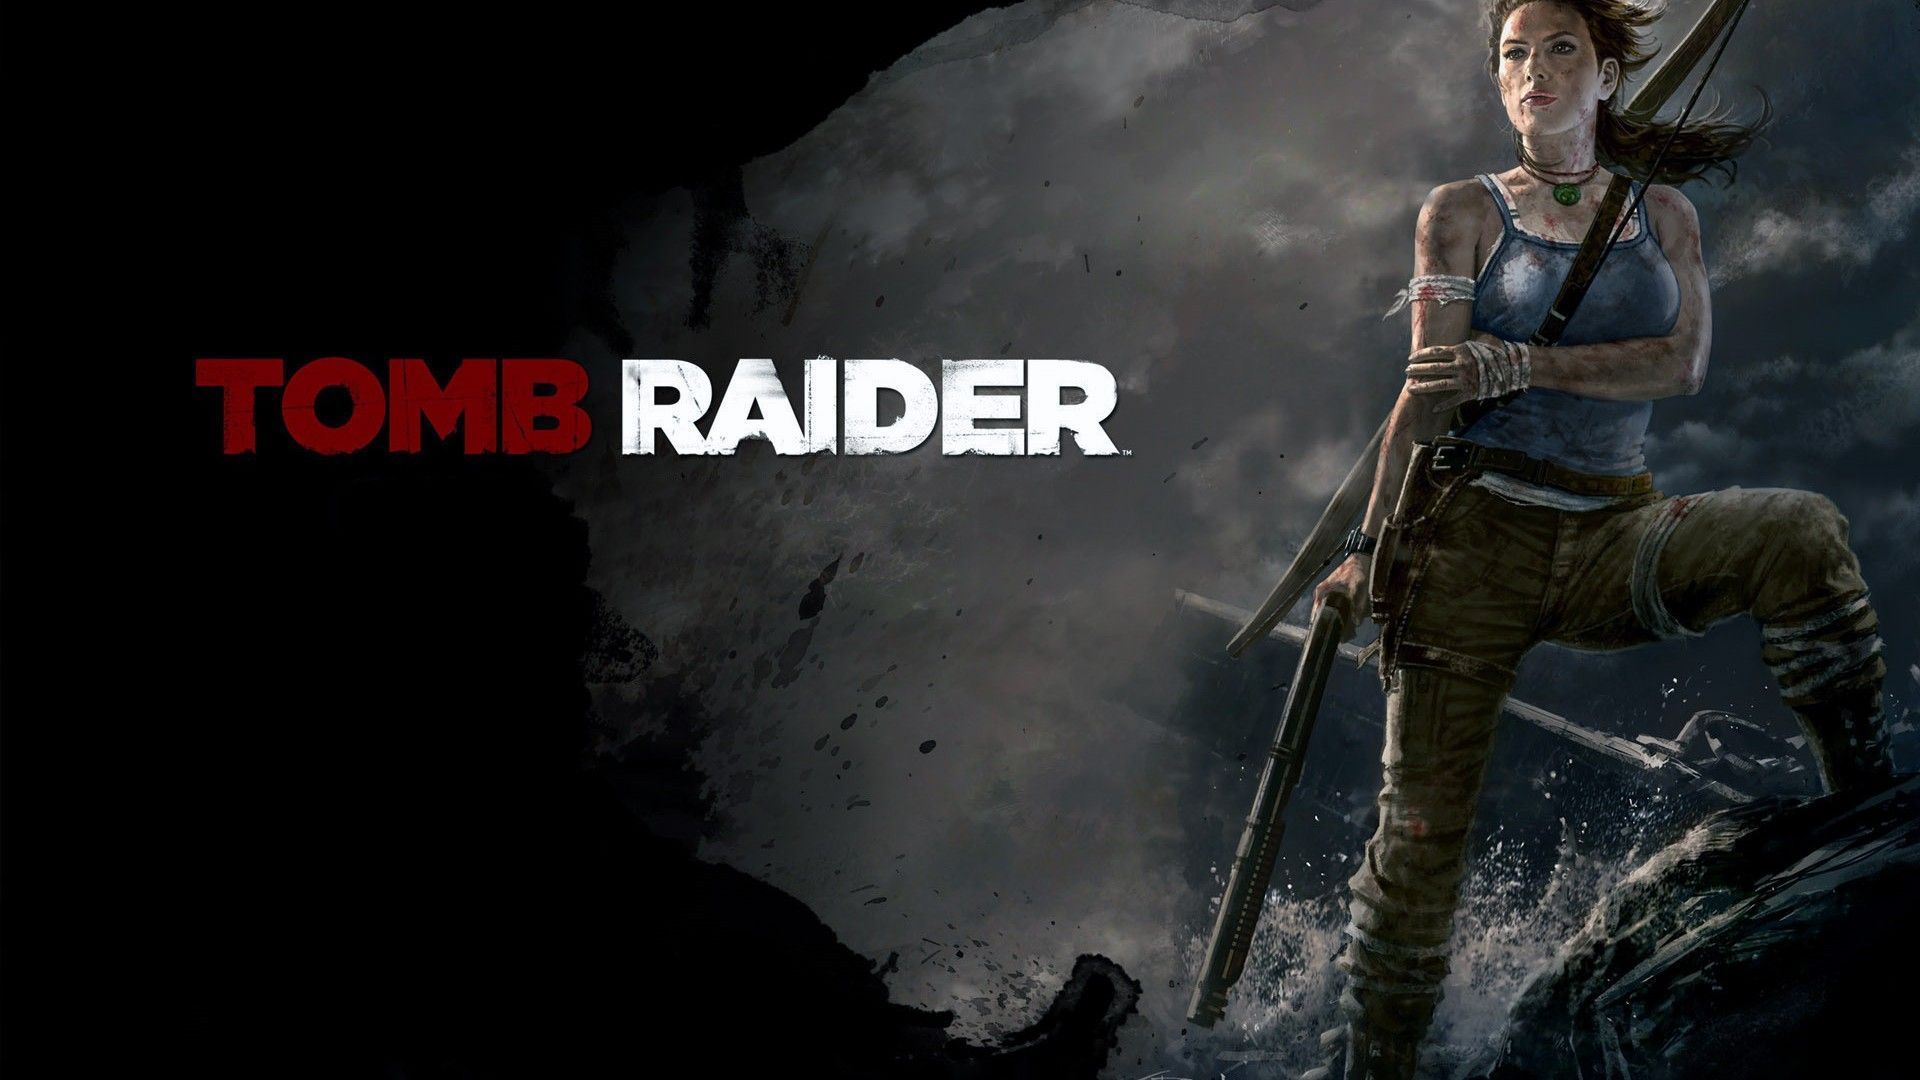 Tomb-Raider-wallpaper-1080p.jpg